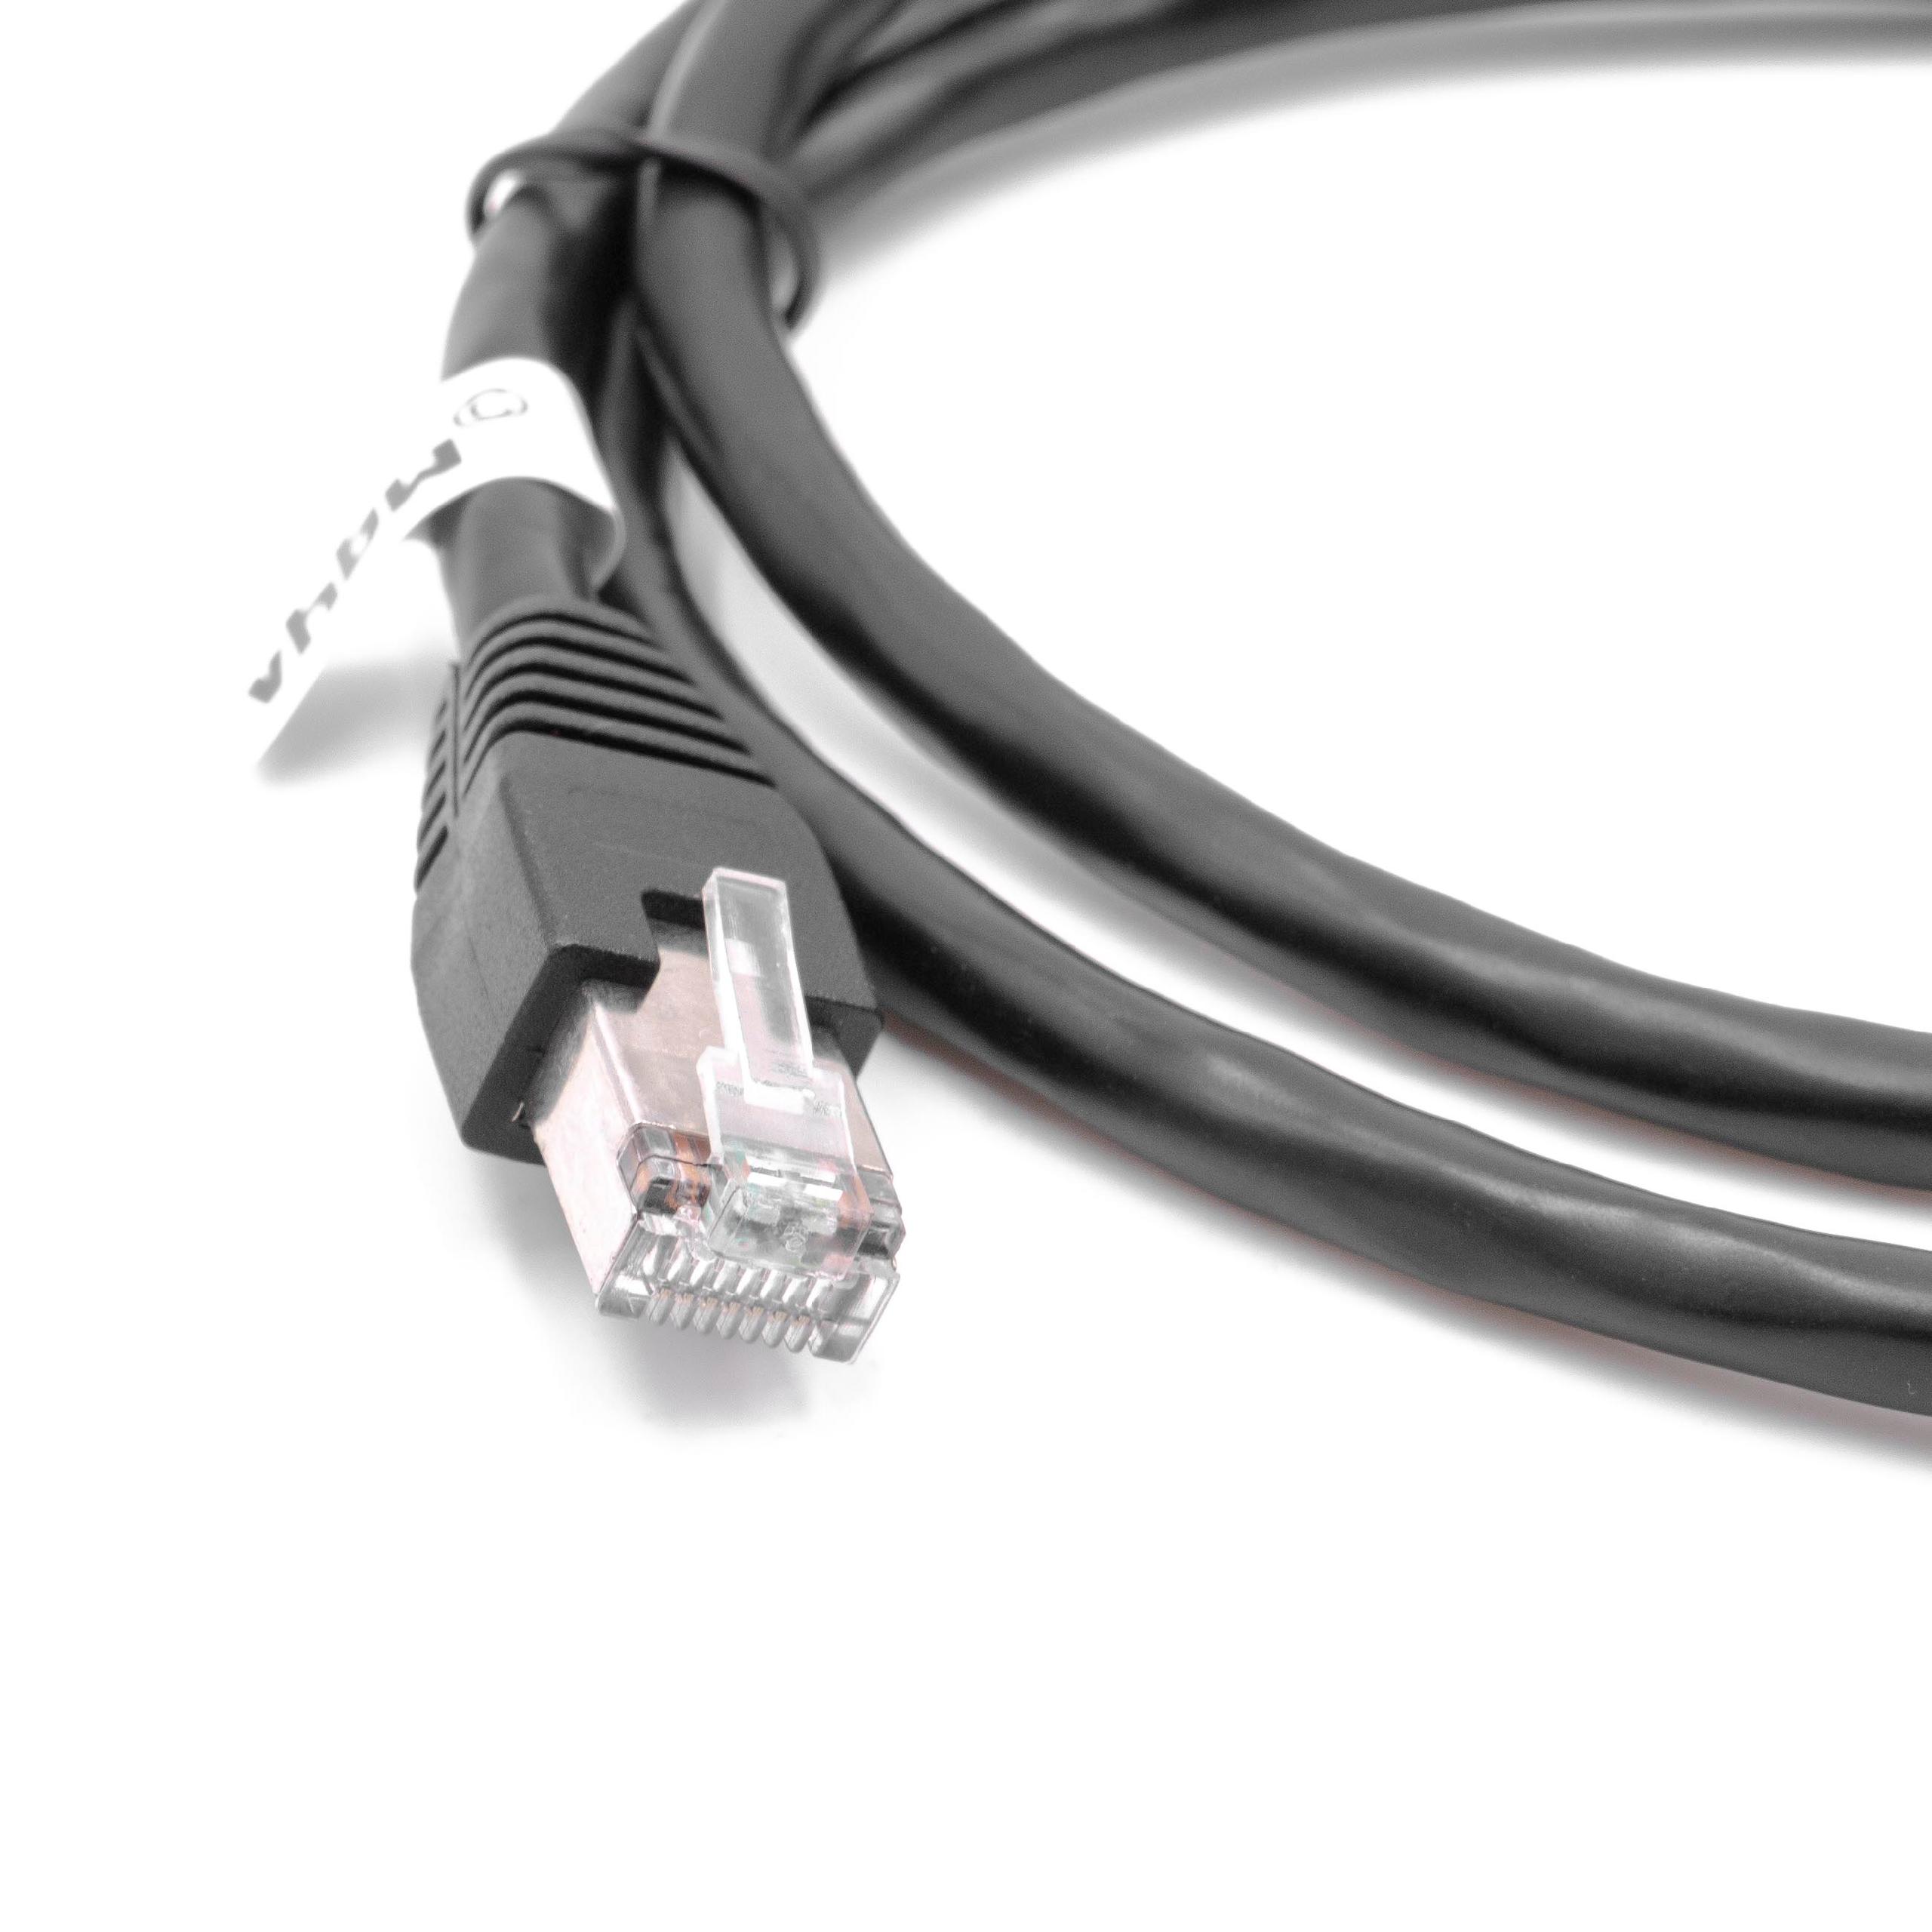 Câble de rallonge Cat6 RJ45 mâle vers RJ45 femelle - Câble LAN Ethernet avec prise RJ45 encastrée, 1 m